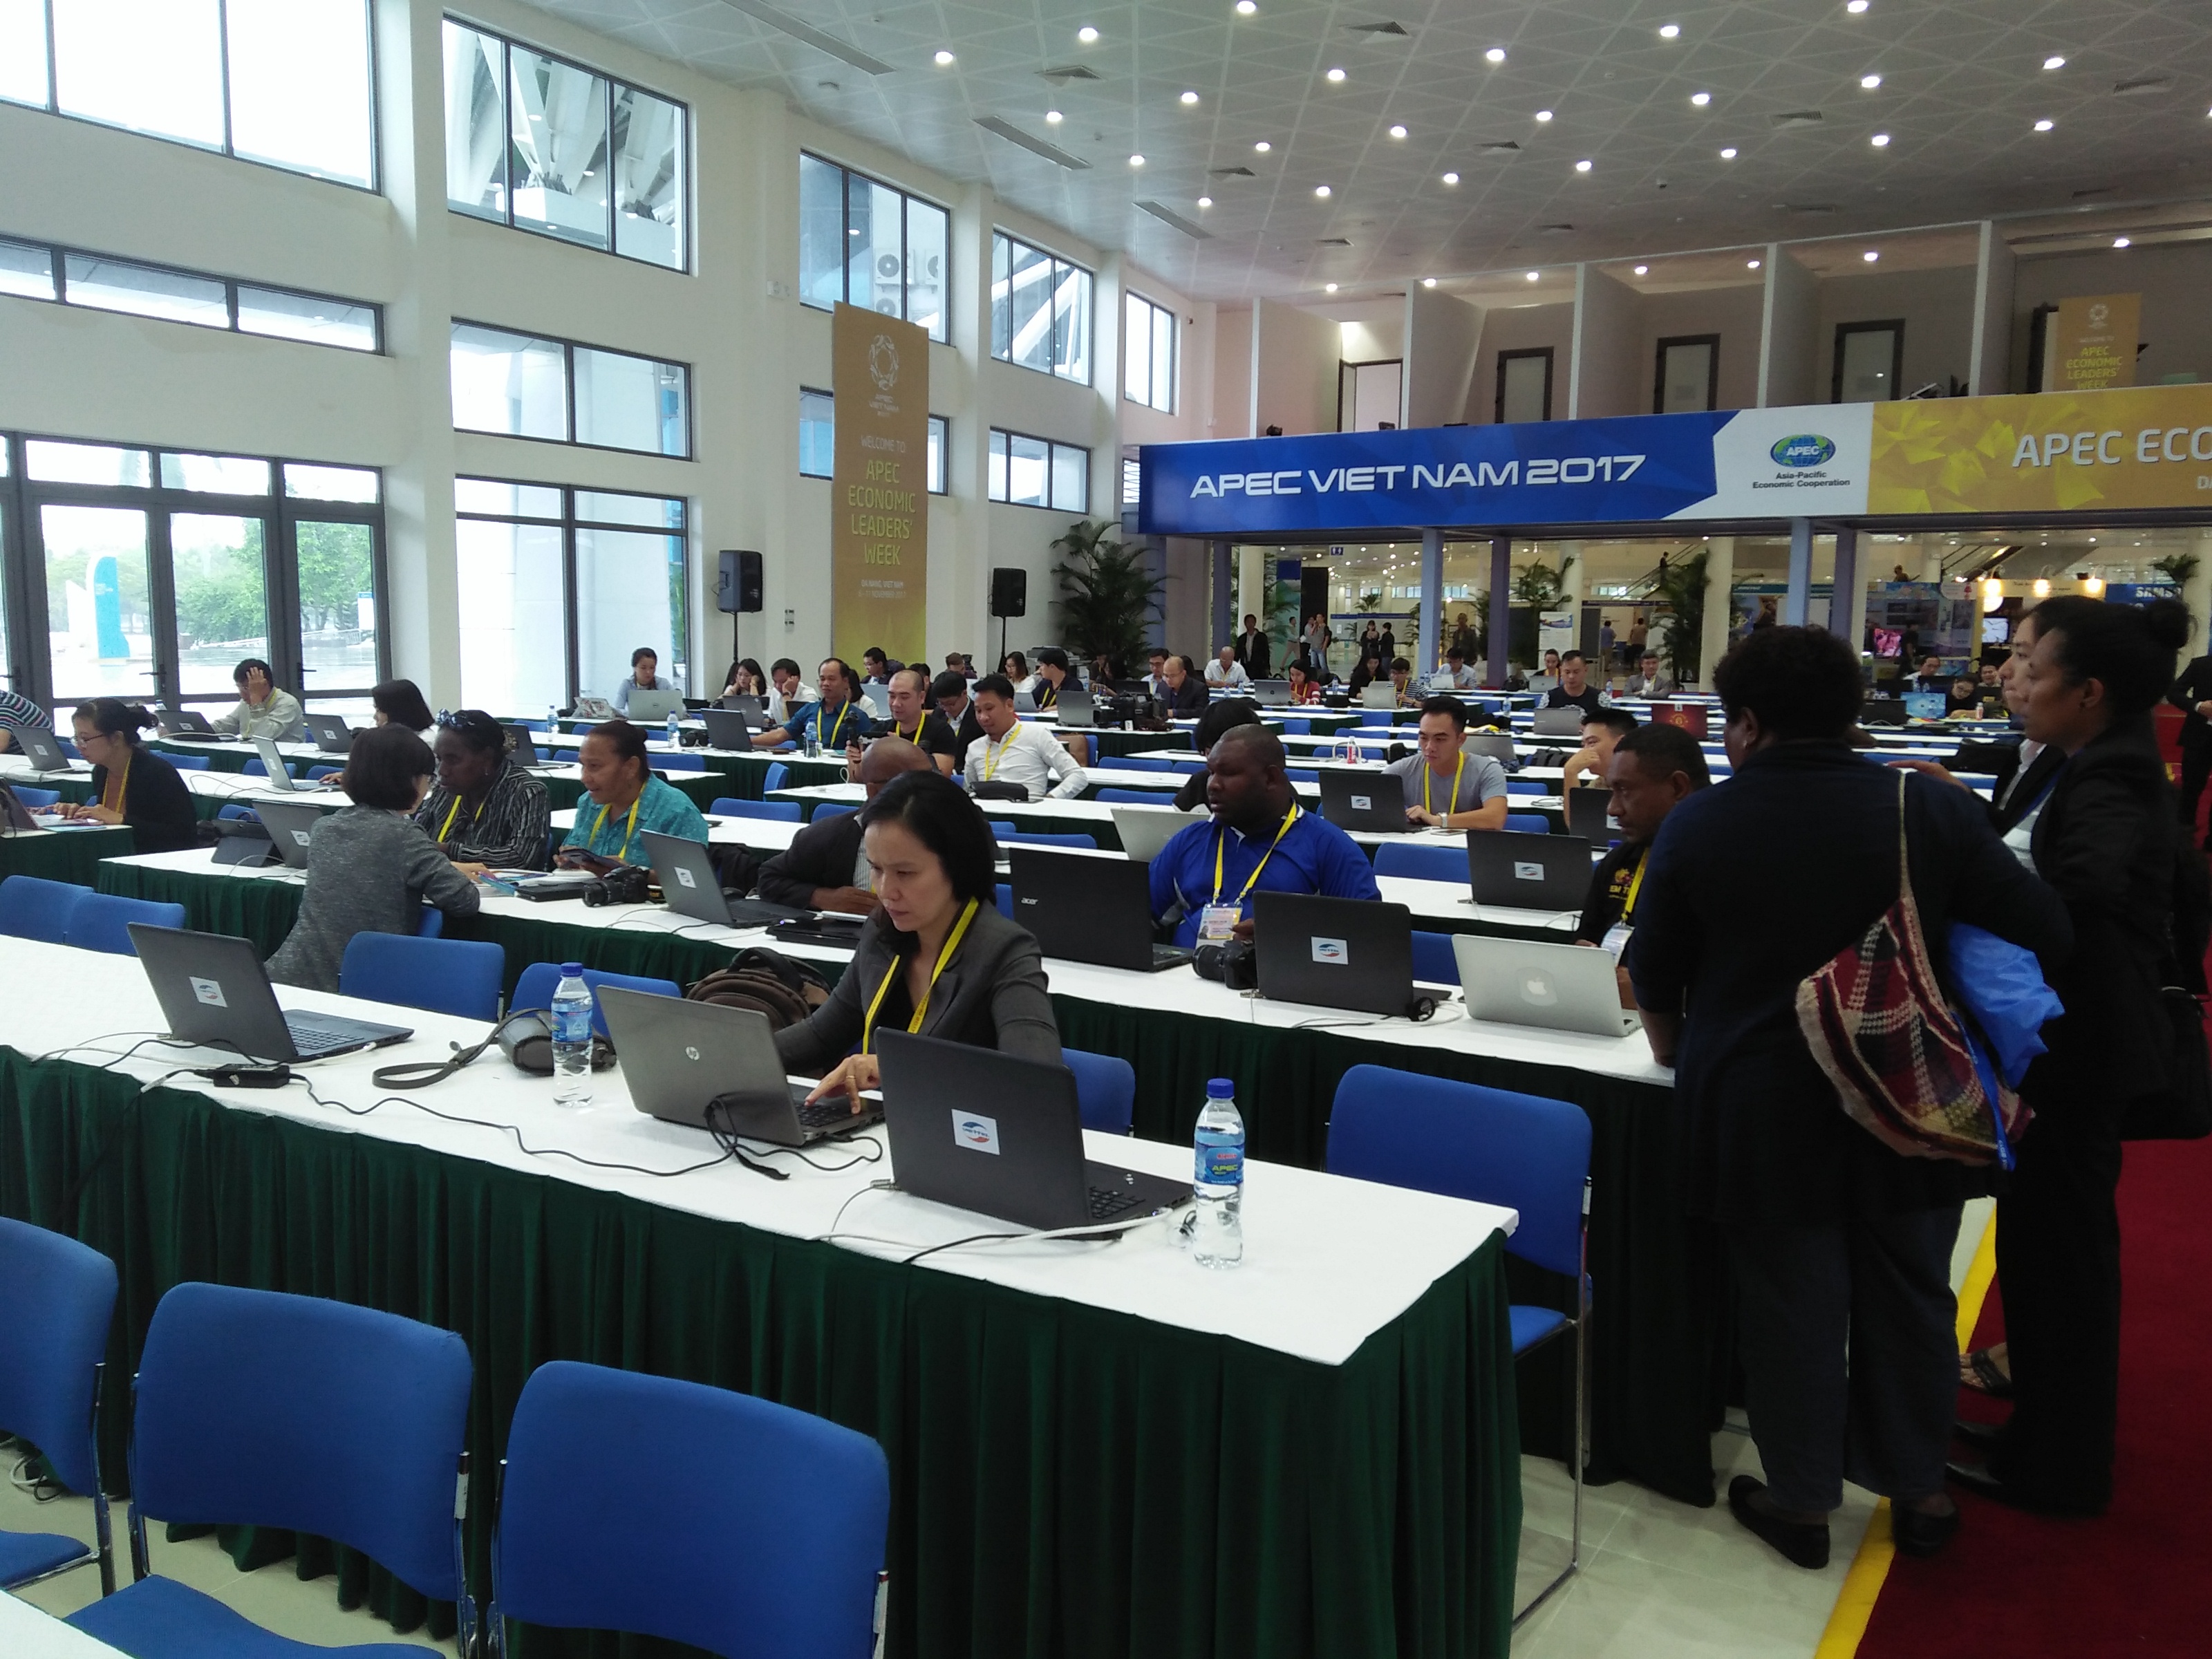 APEC media centre in full swing